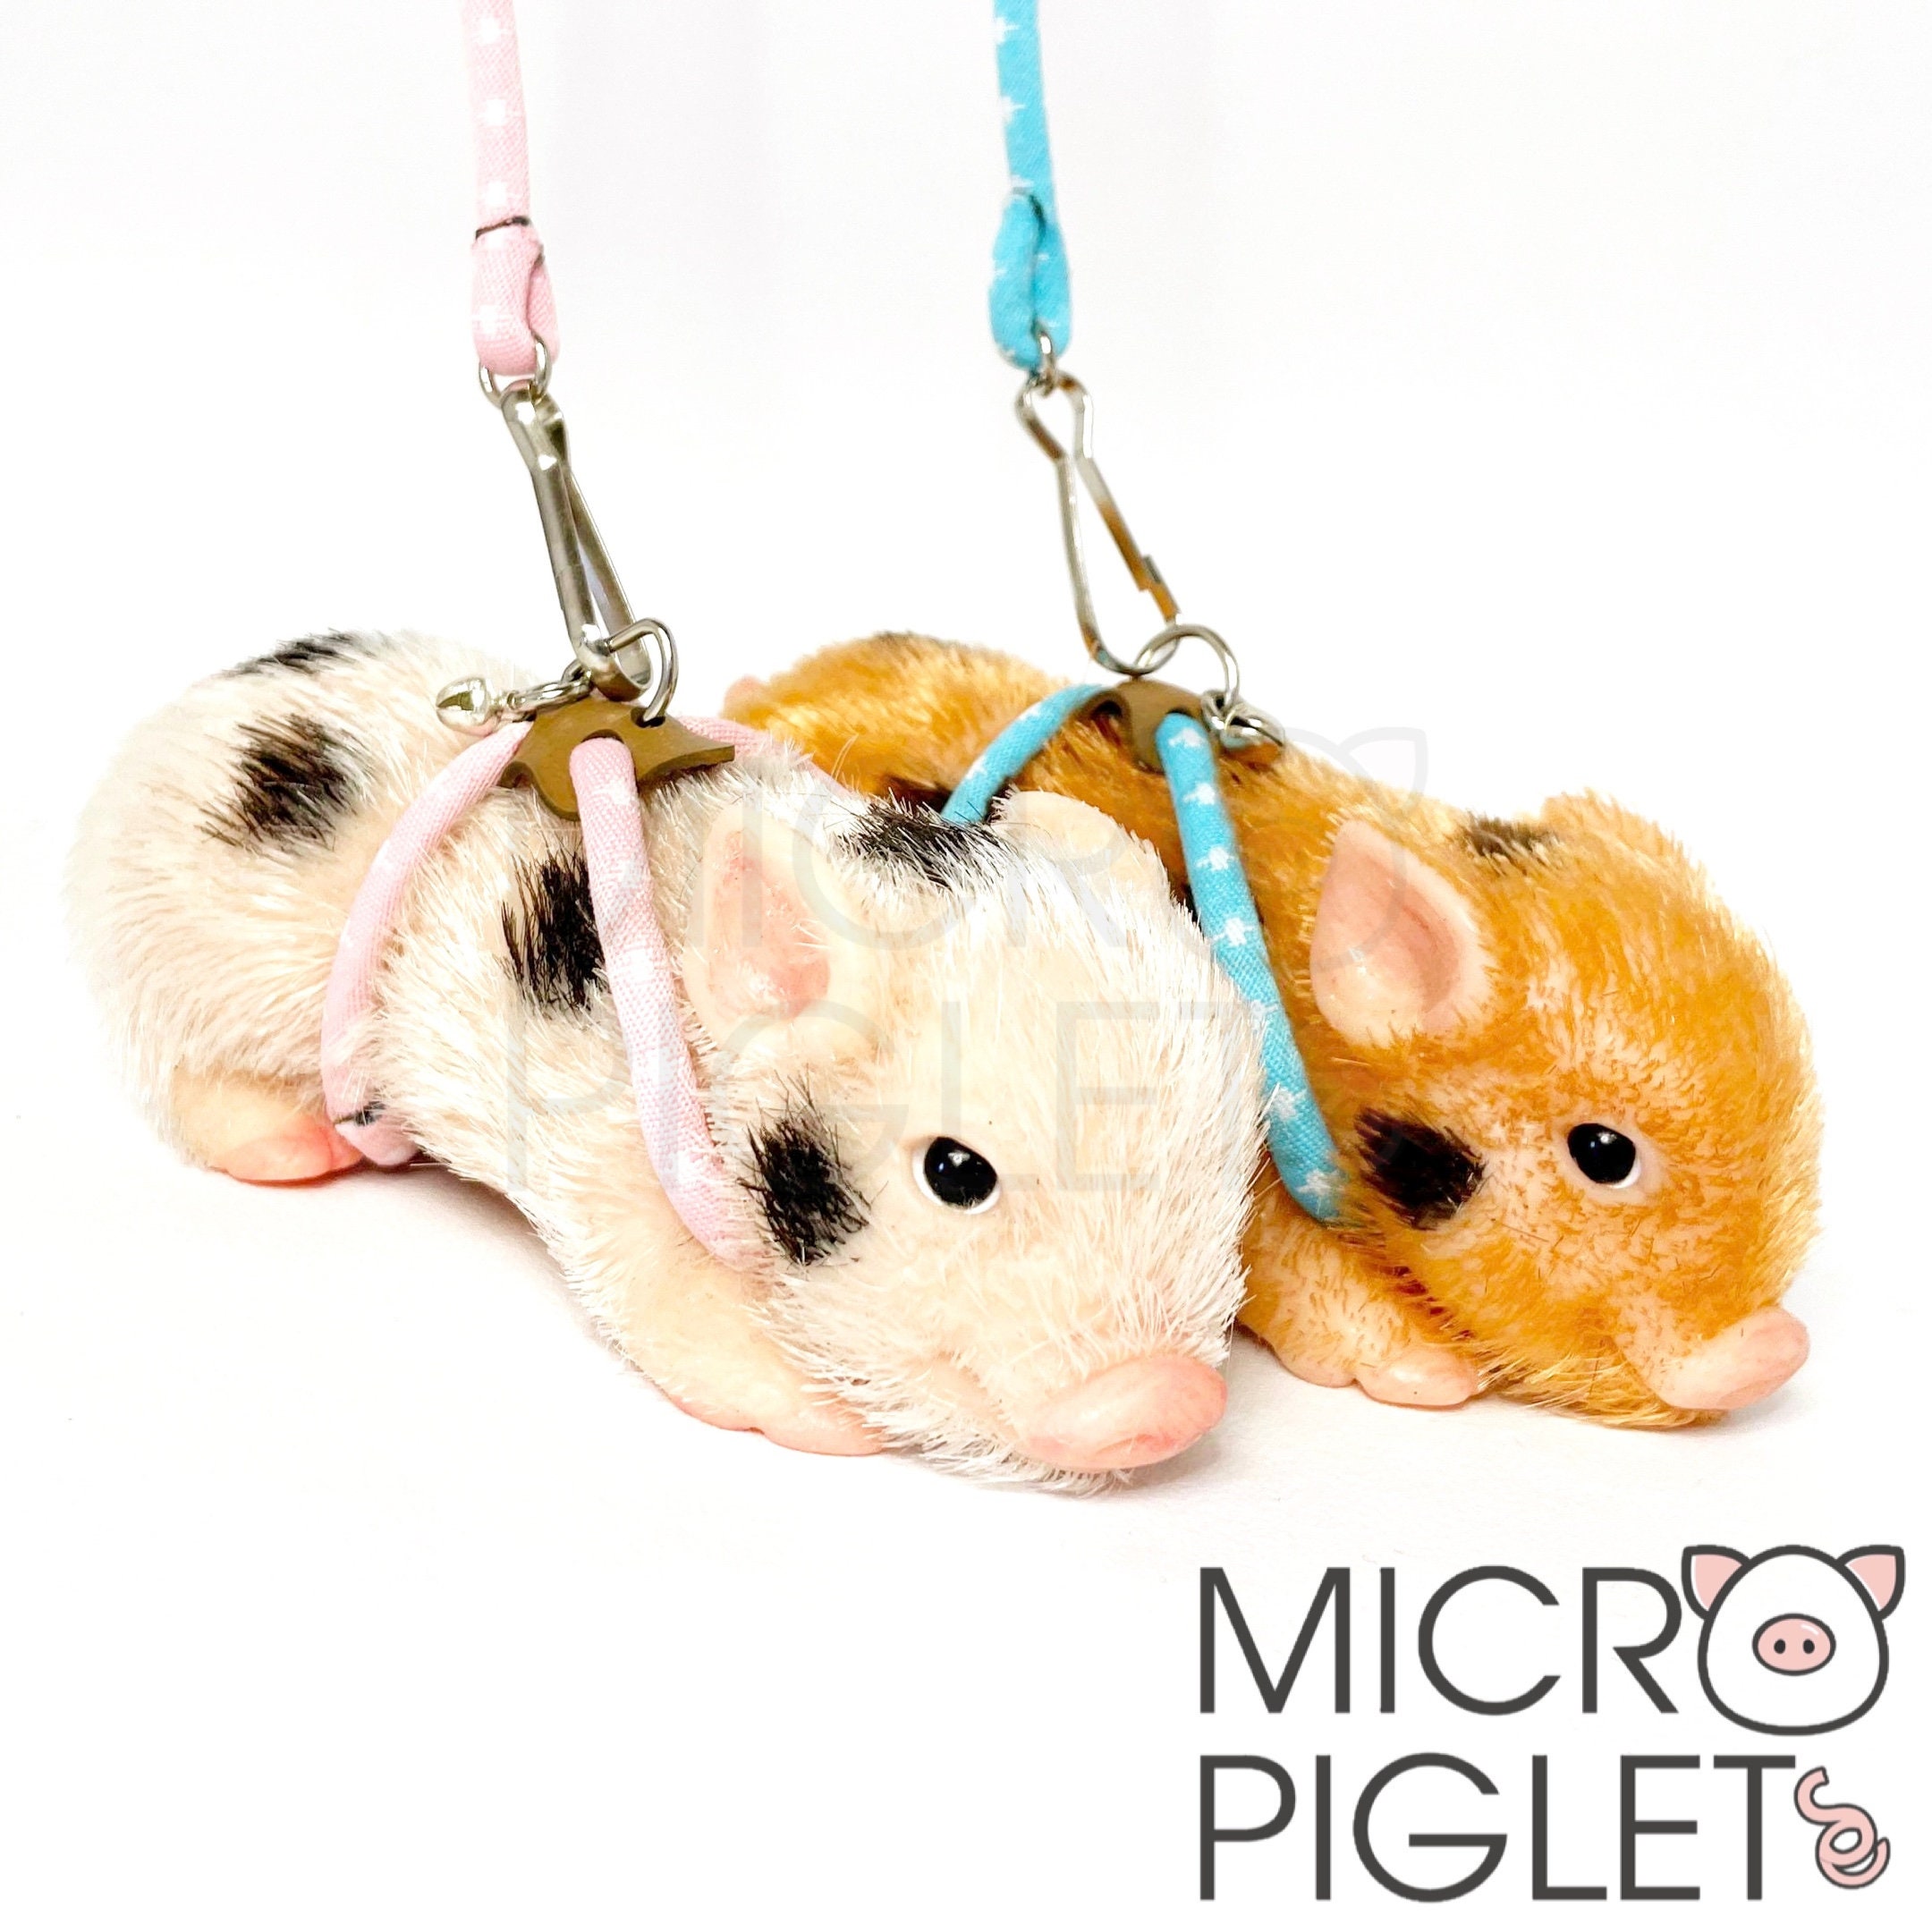 Mini Full Body Silicone Piglets AKA Micro Reborn Pigs Brown with Spots